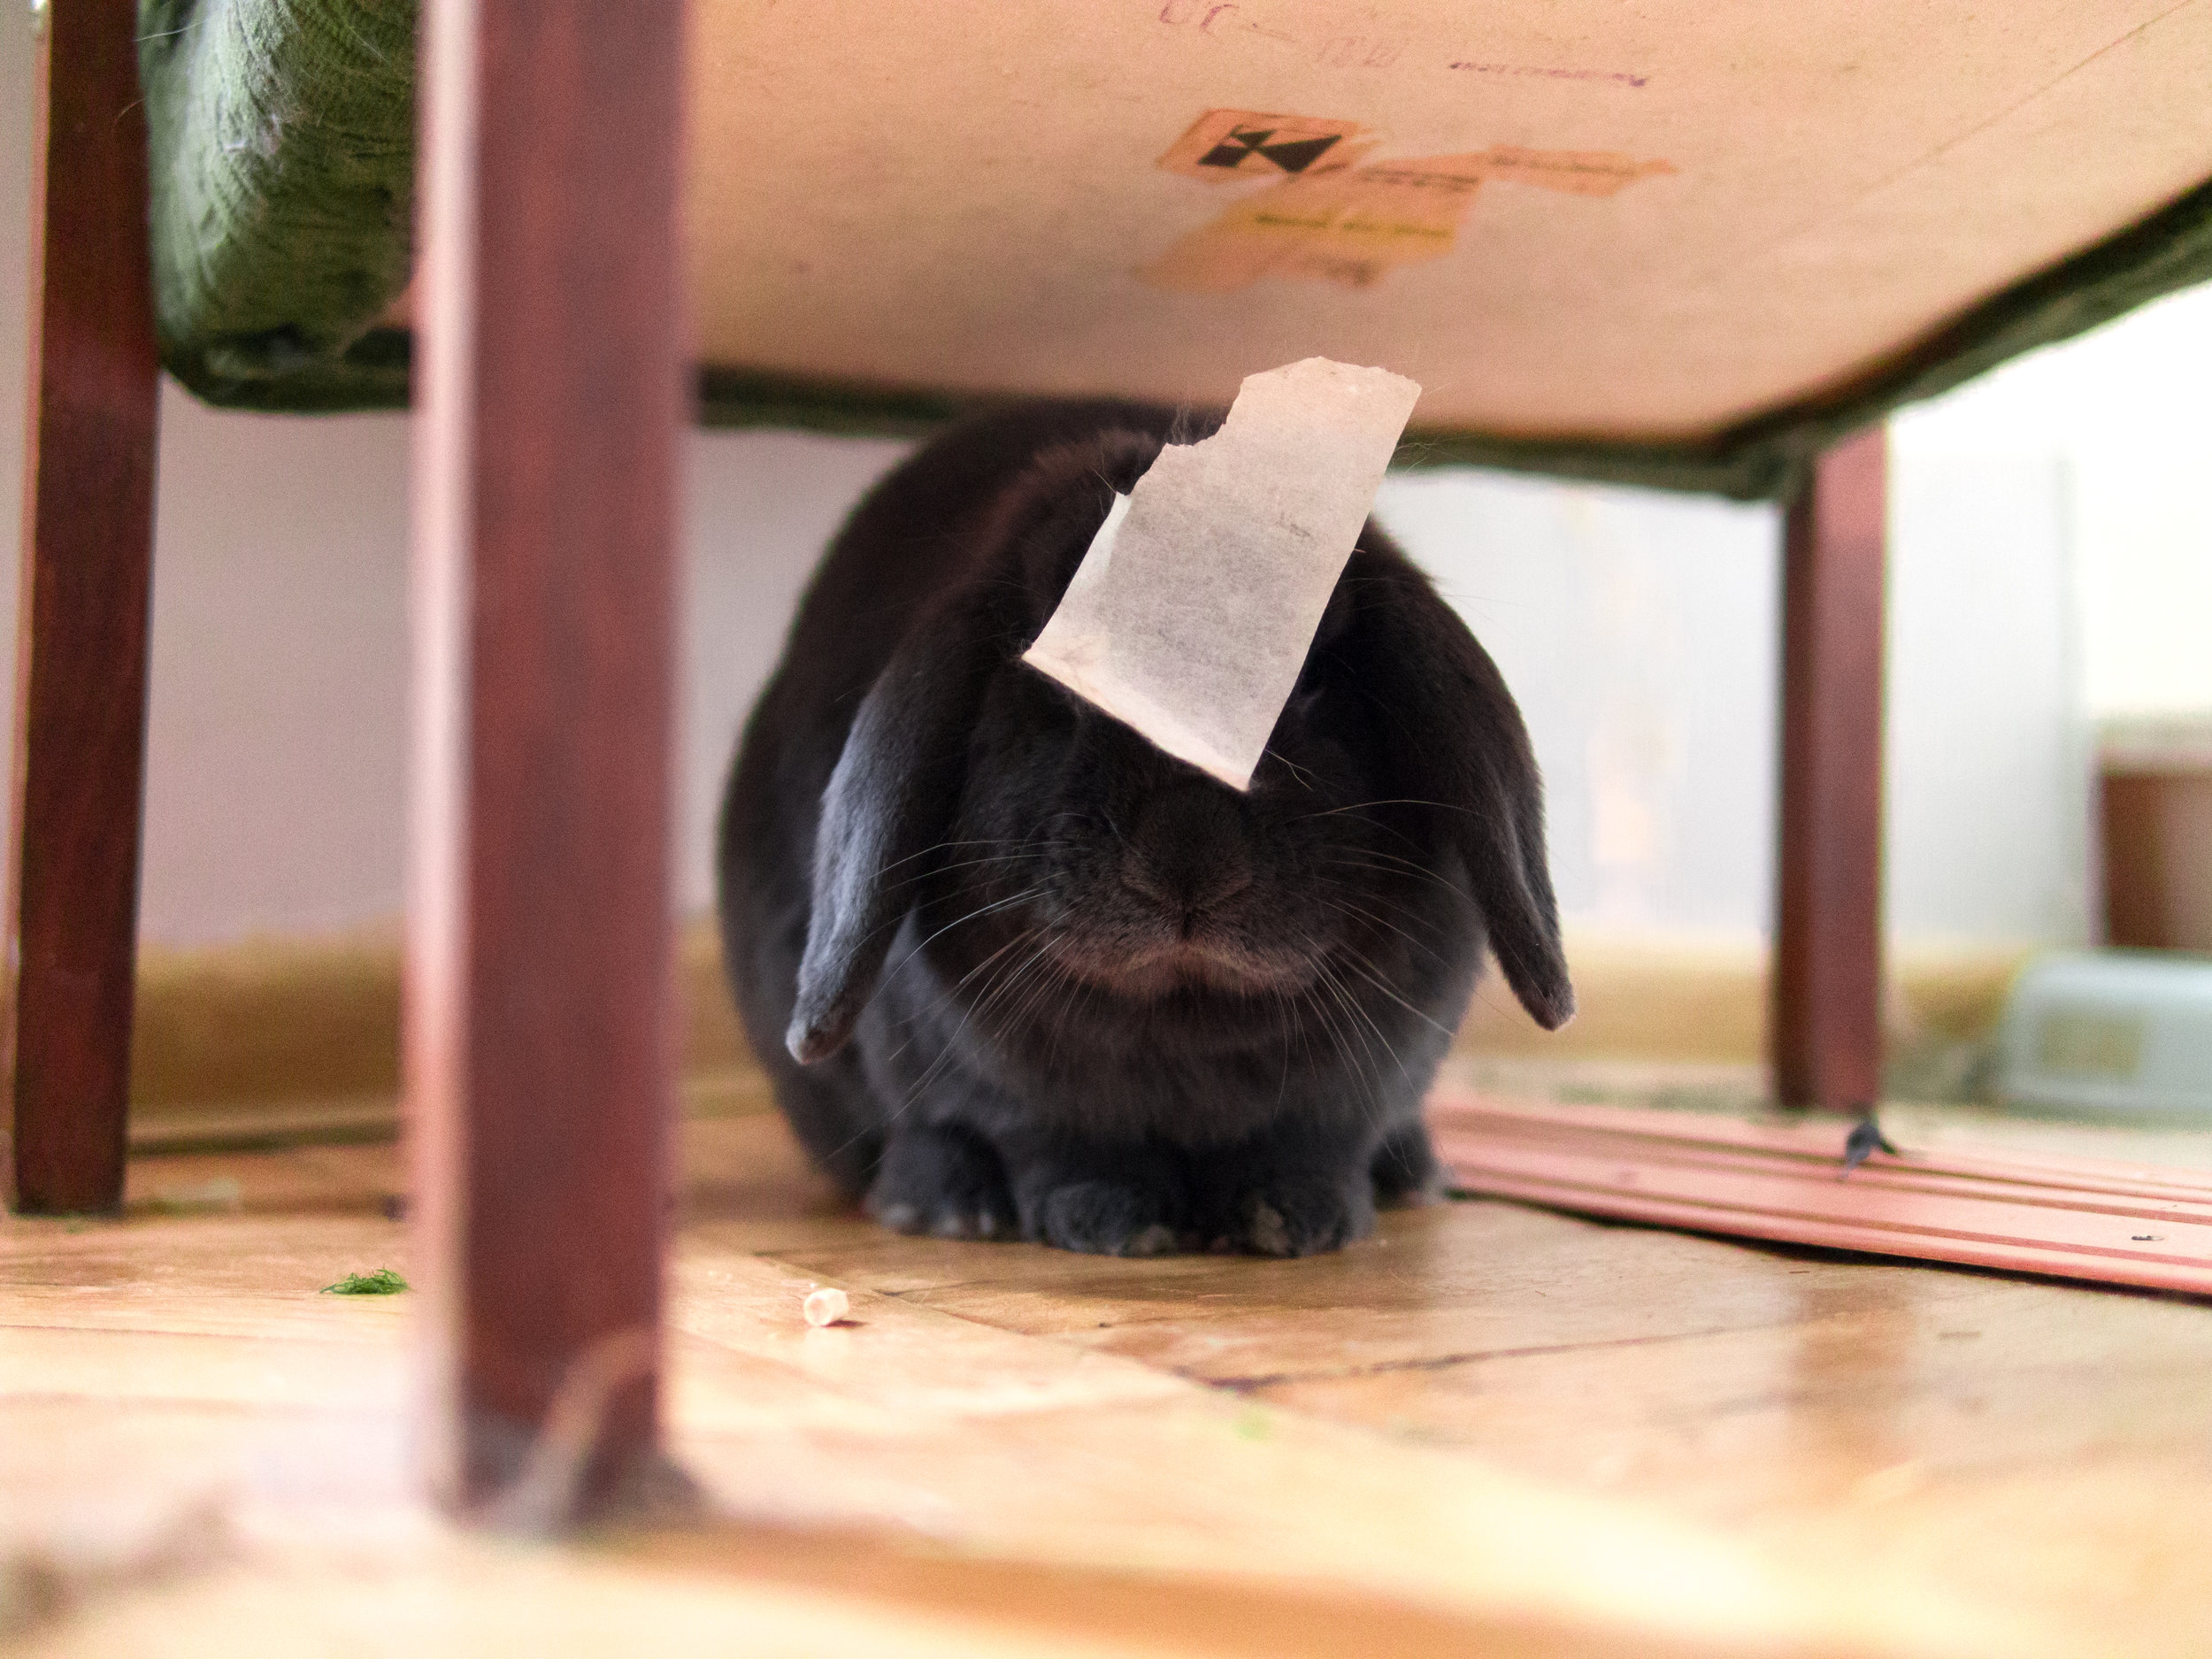 Evidence of Bunny's Mischief Is Stuck to His Head